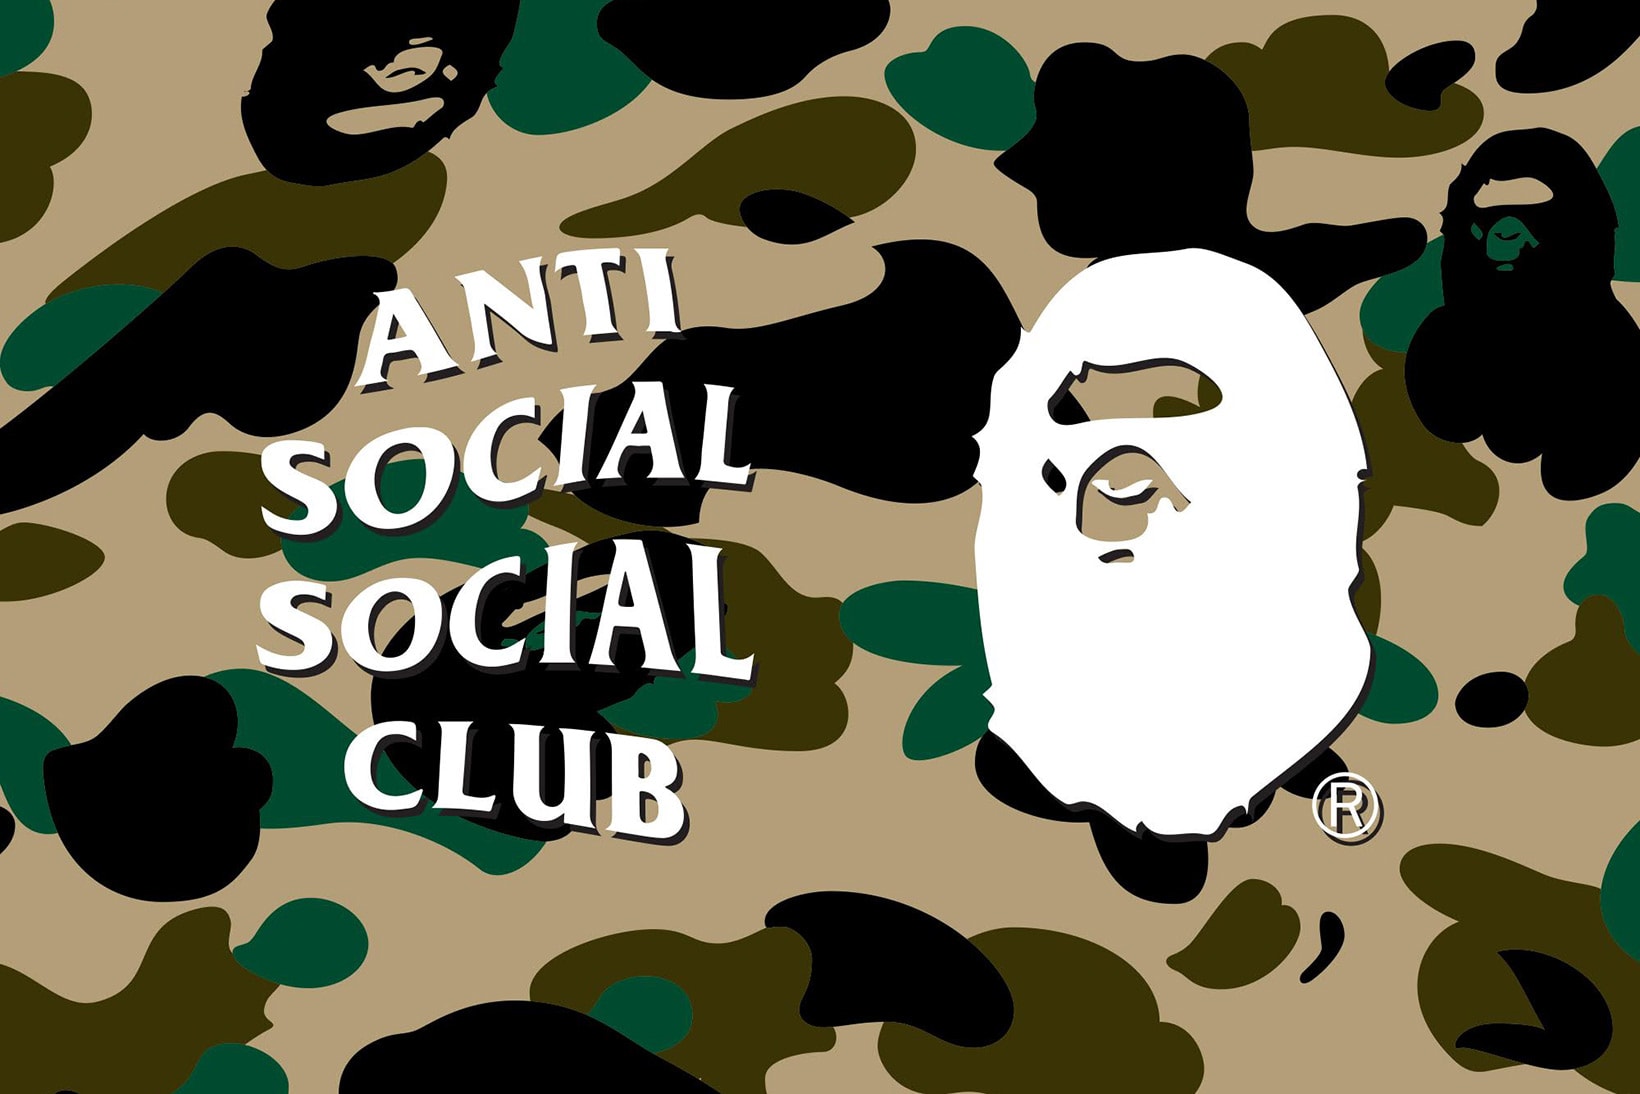 BAPE Anti Social Social Club Teaser